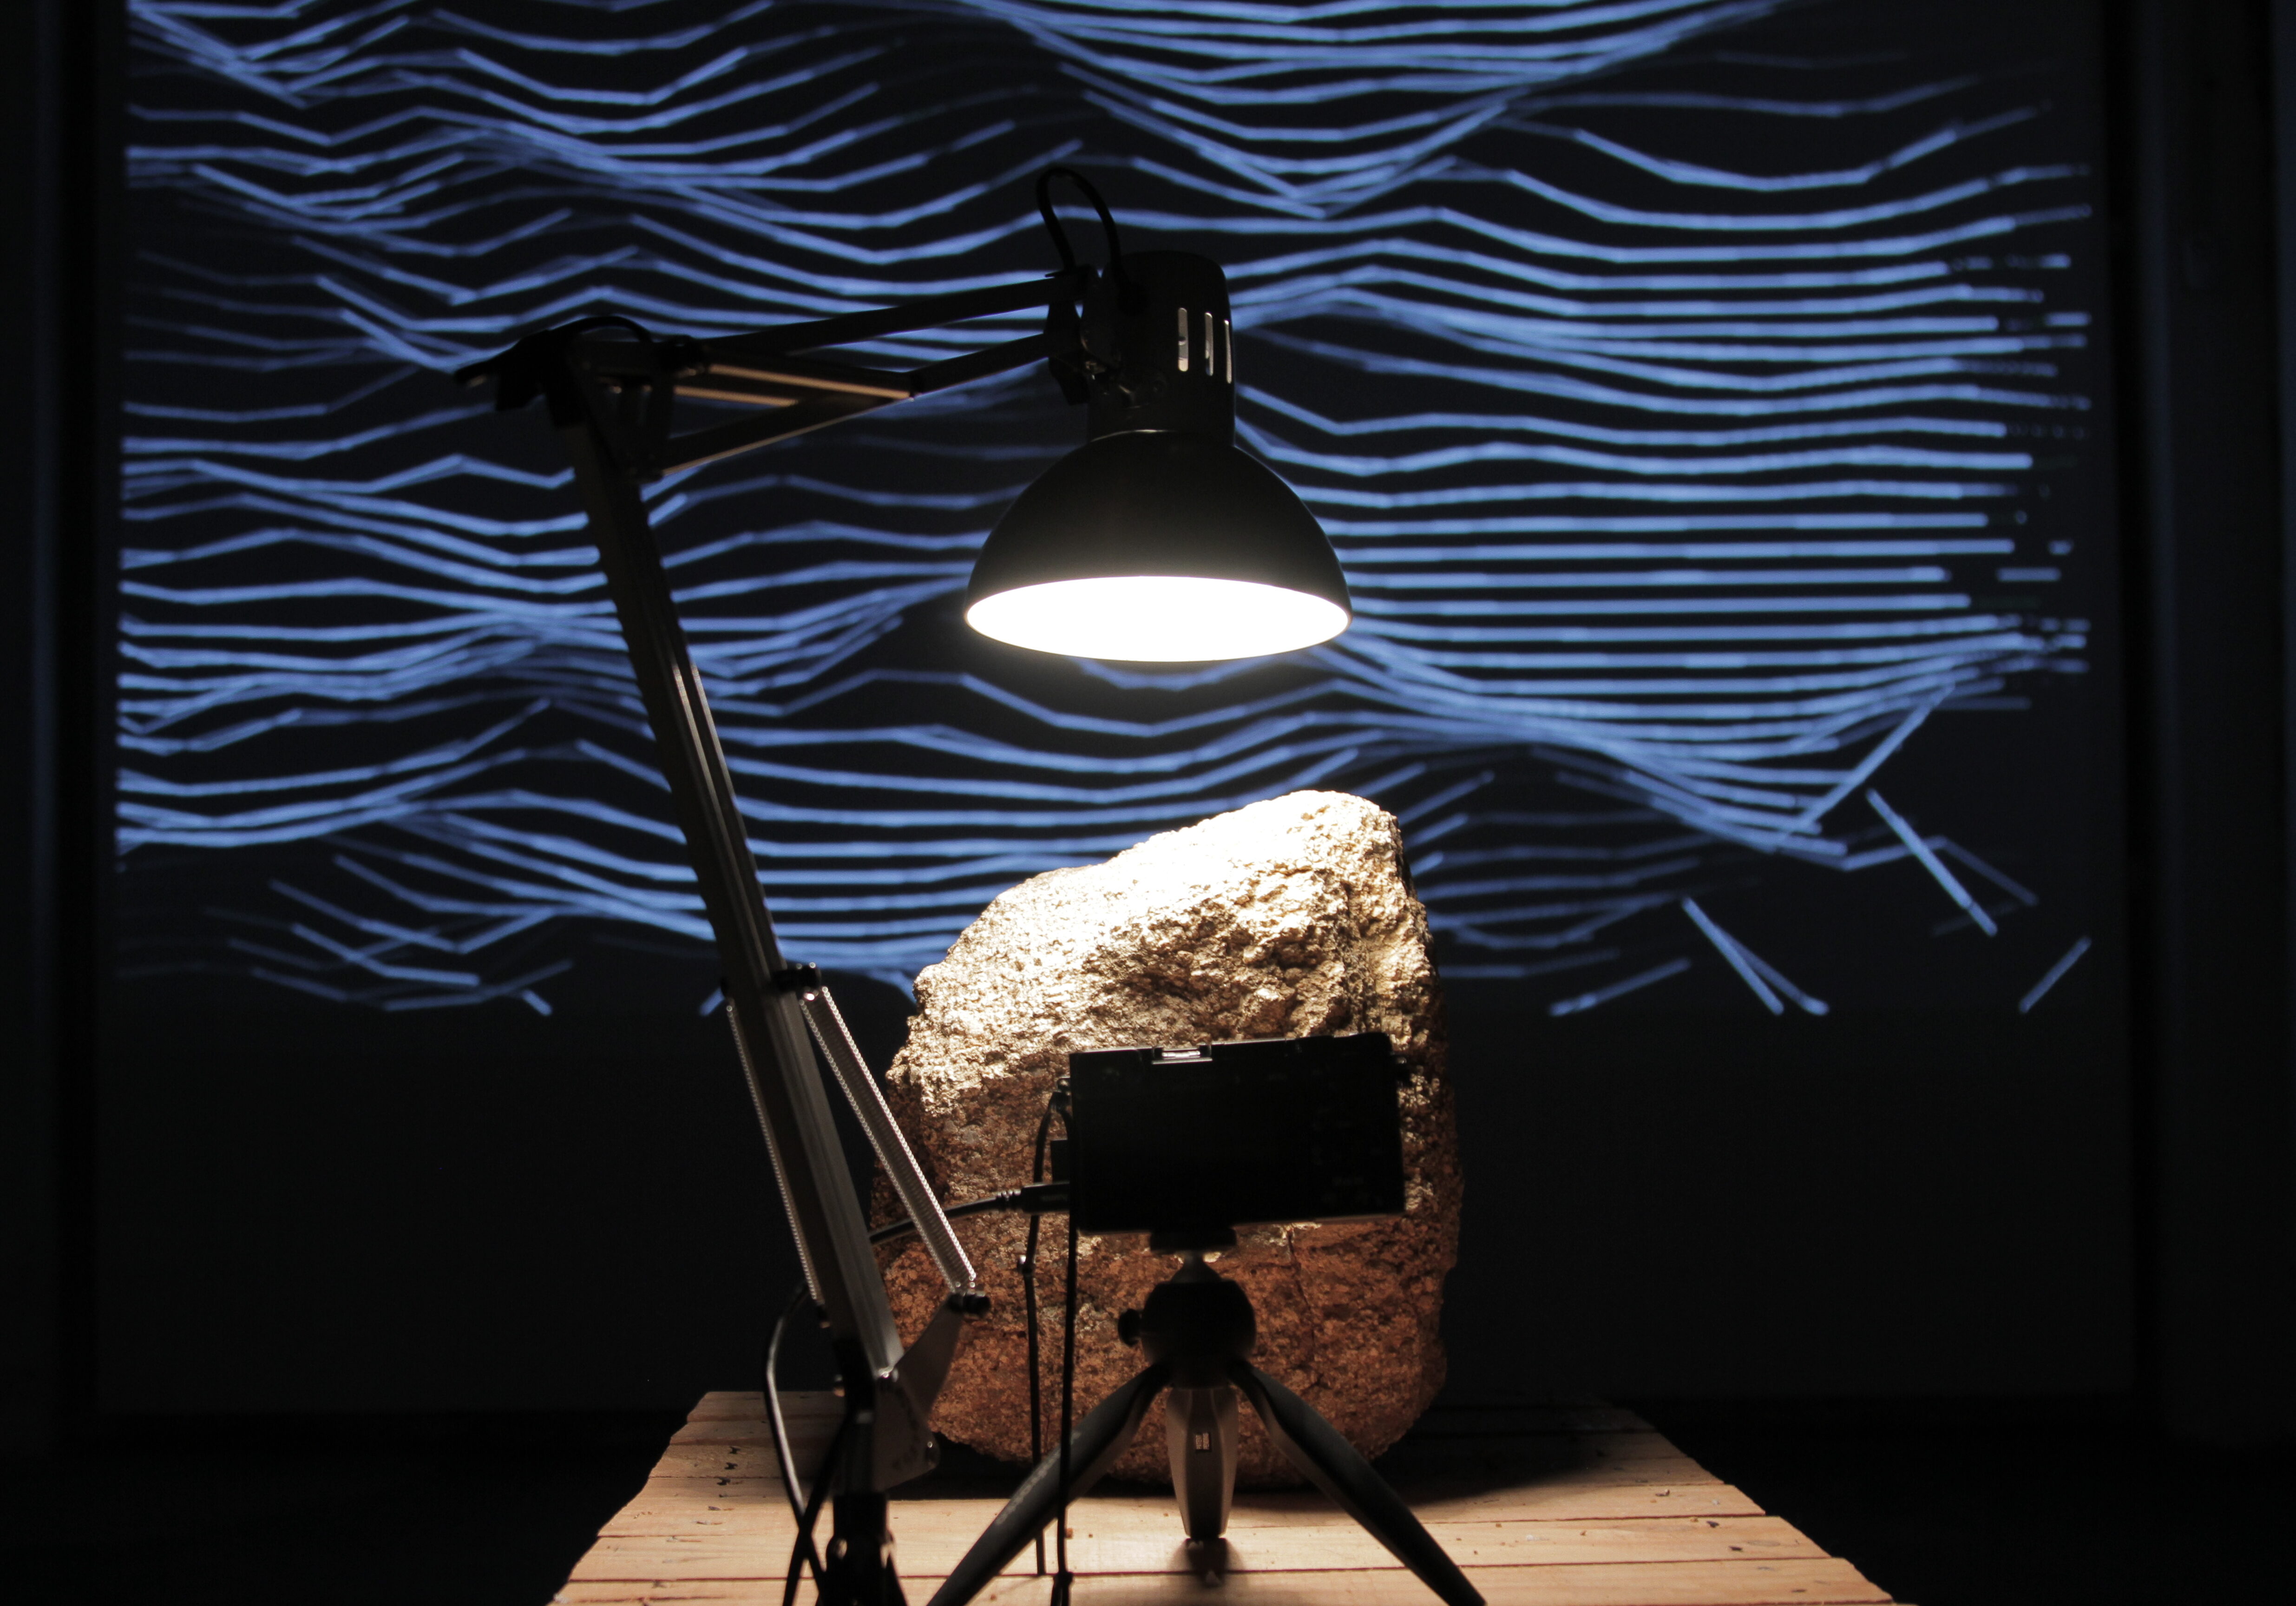 video, sound installation by Guillermo Moreno Mirallas